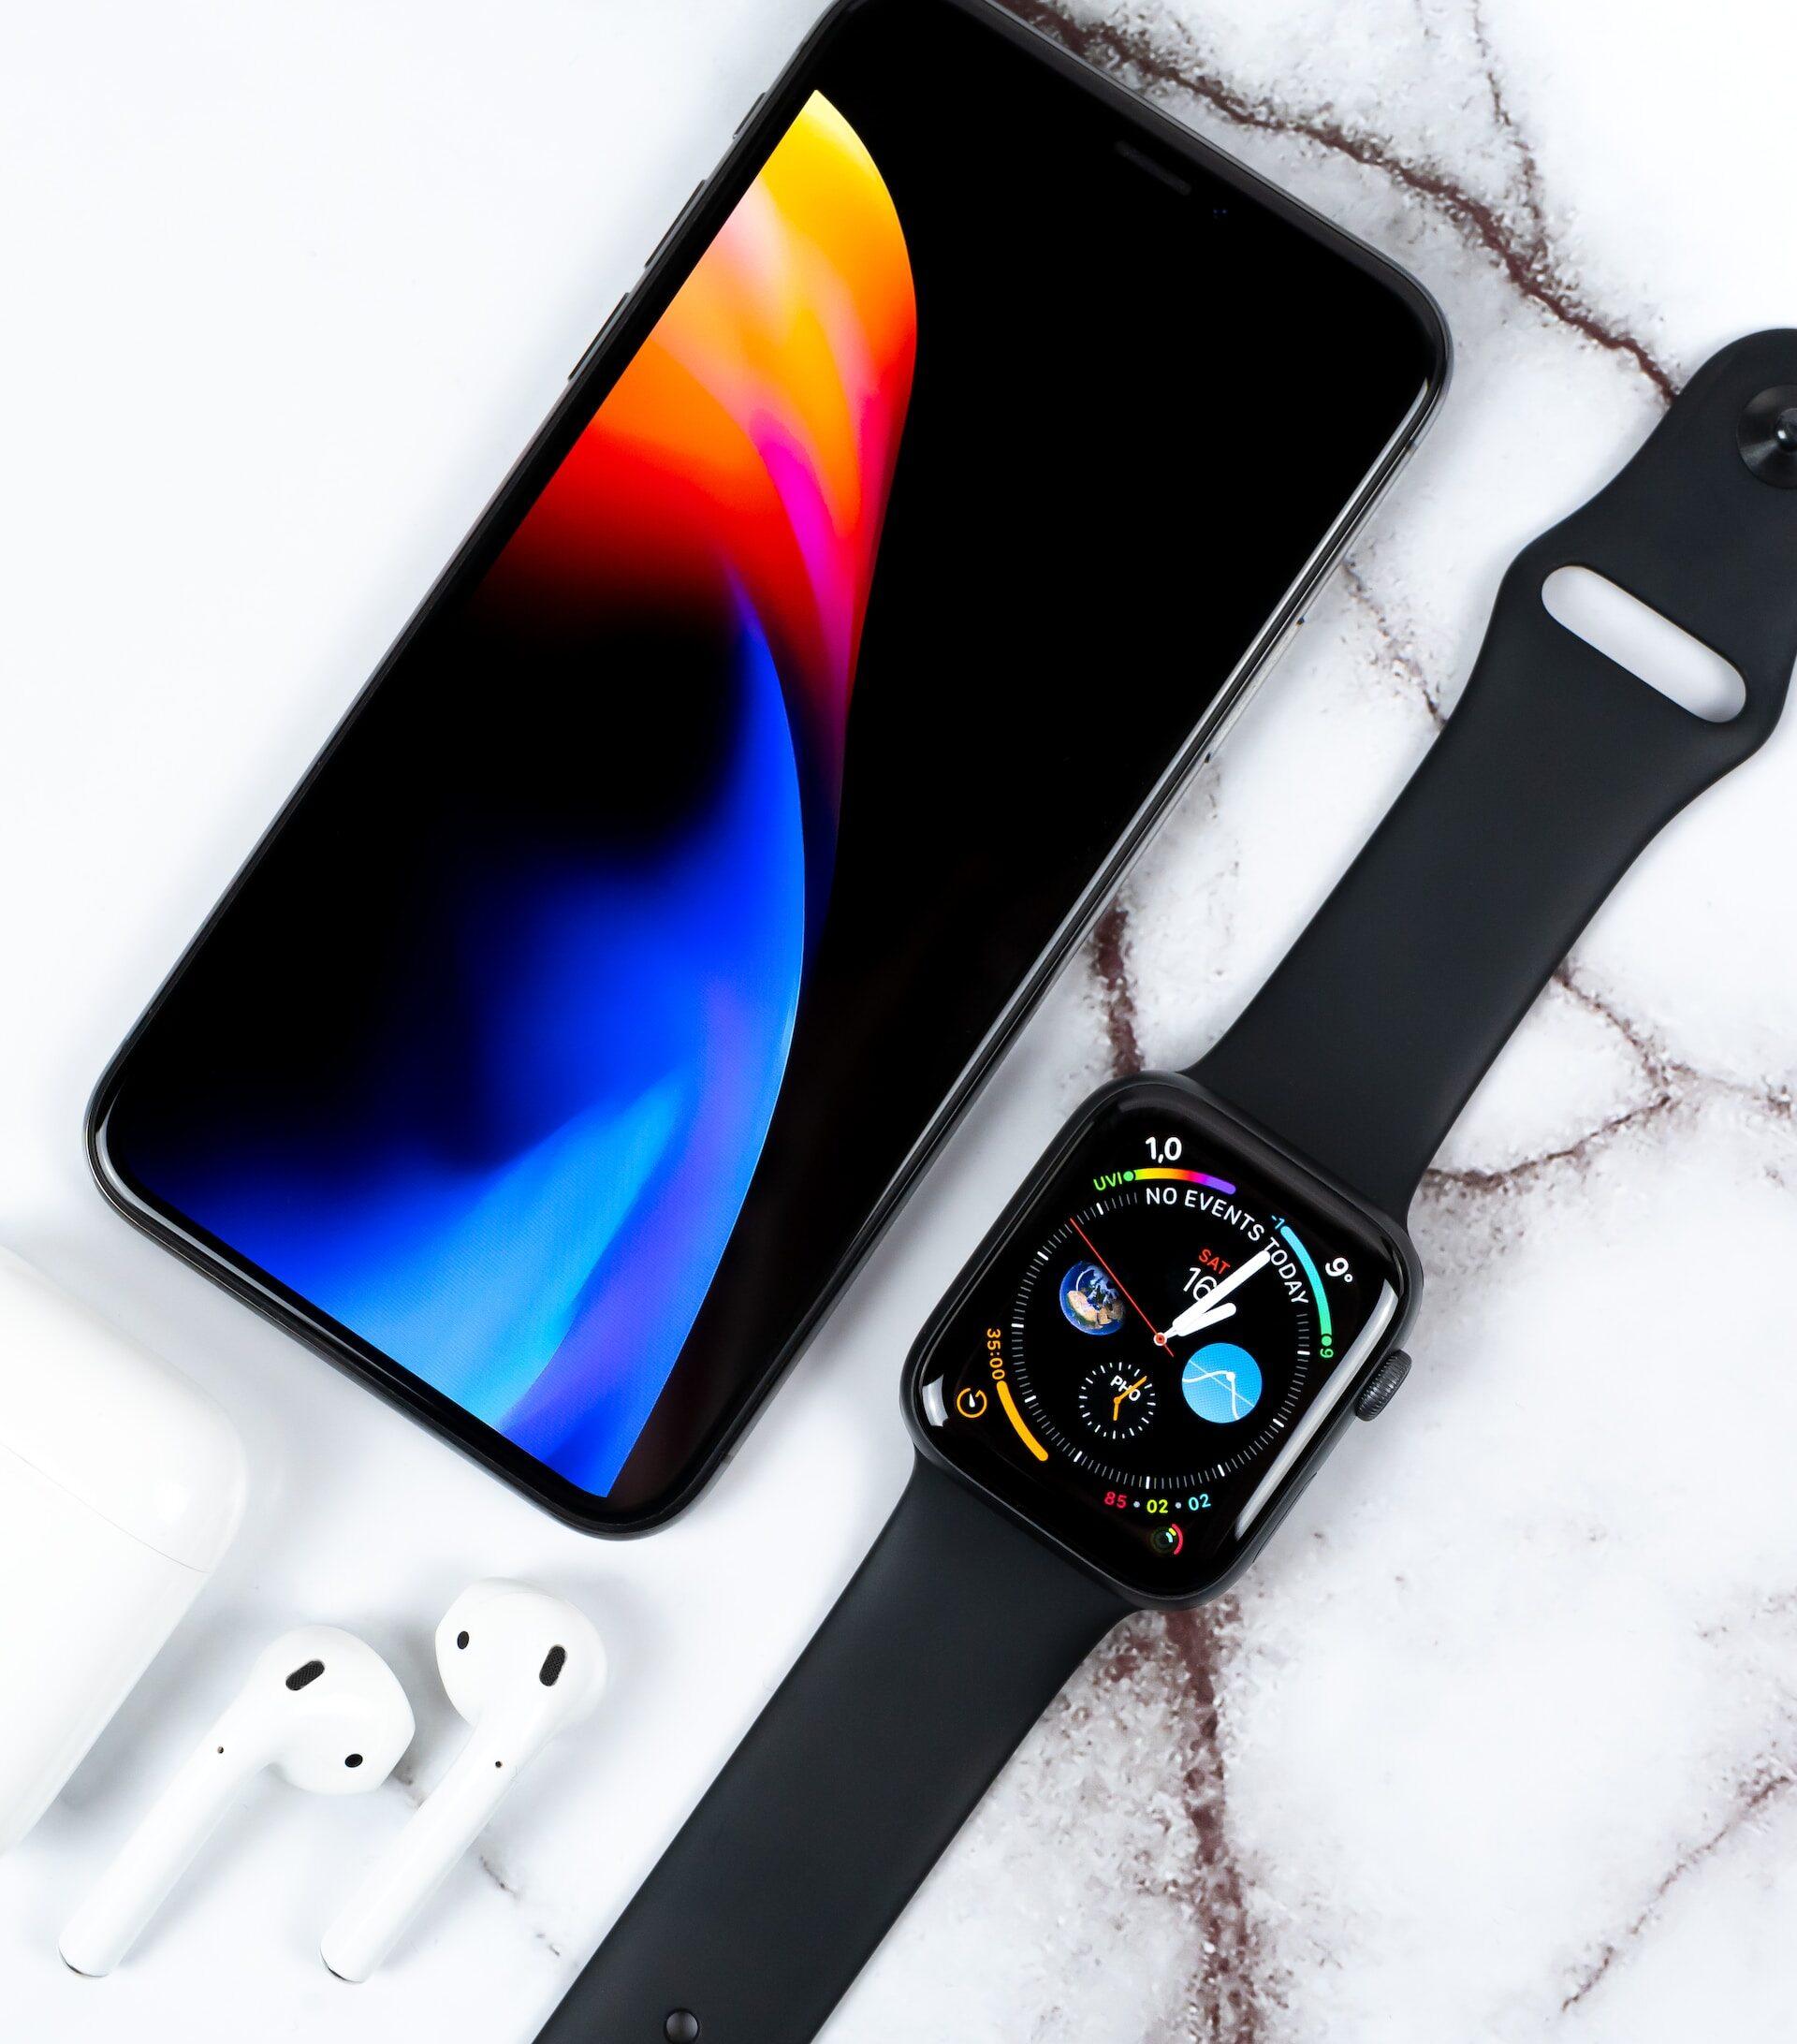 How to Unpair Apple Watch